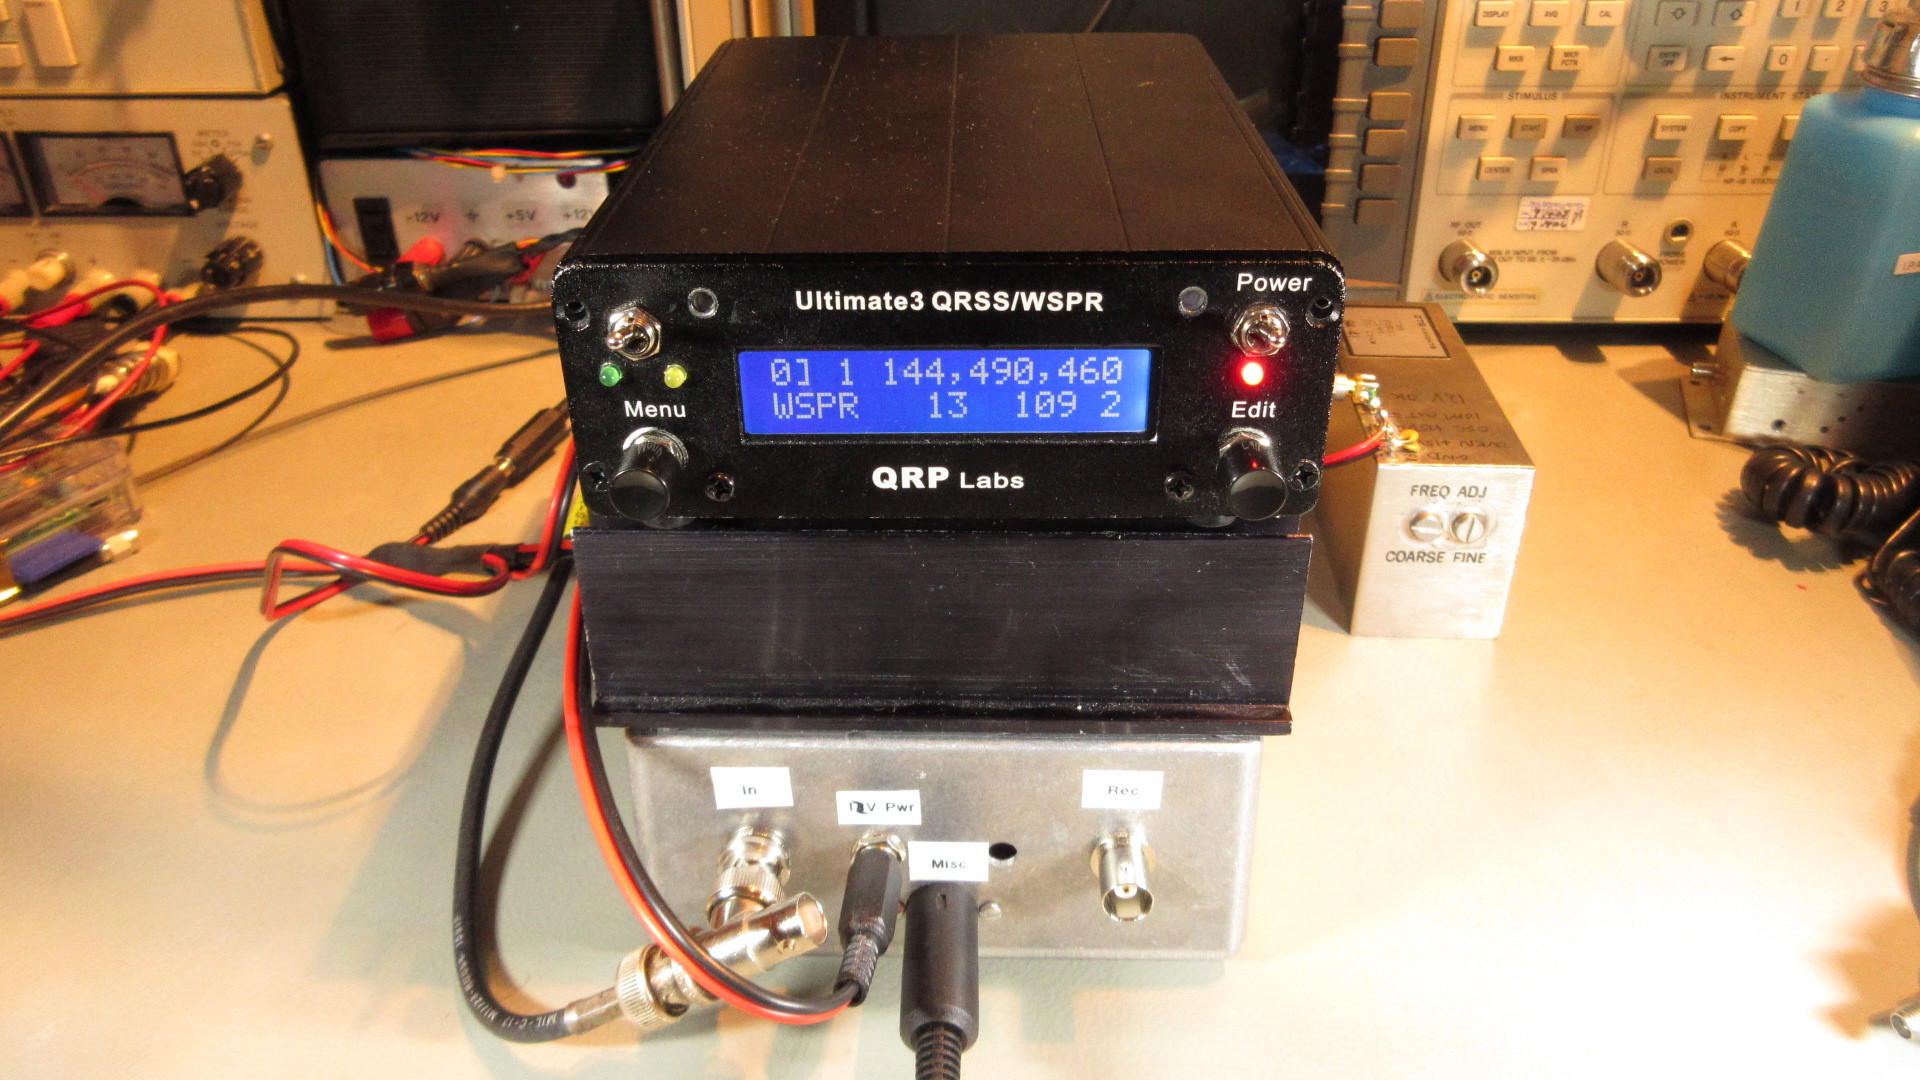 2m WSPR beacon transmitter